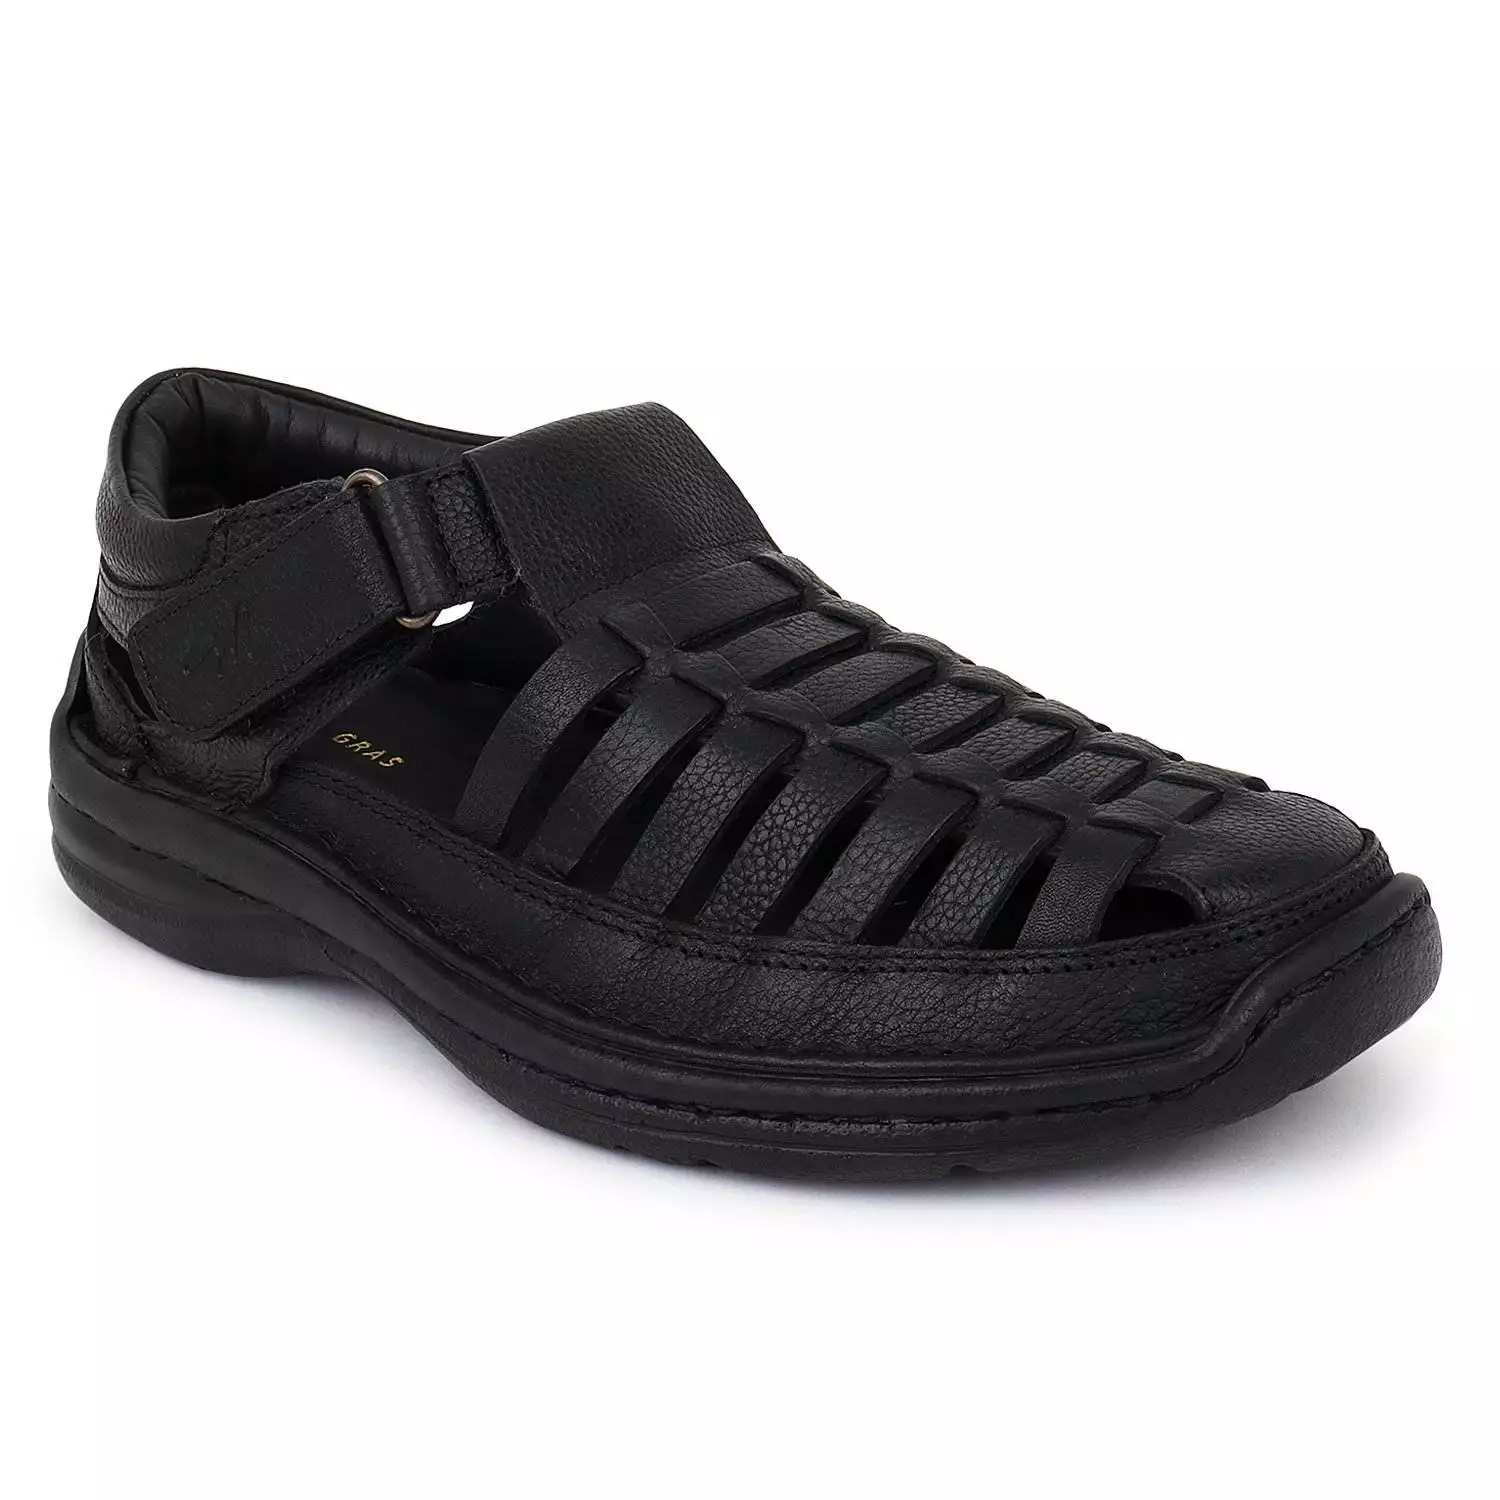 Black Leather Multi Strap Single Toed Sandals for Men - Mardi Gras